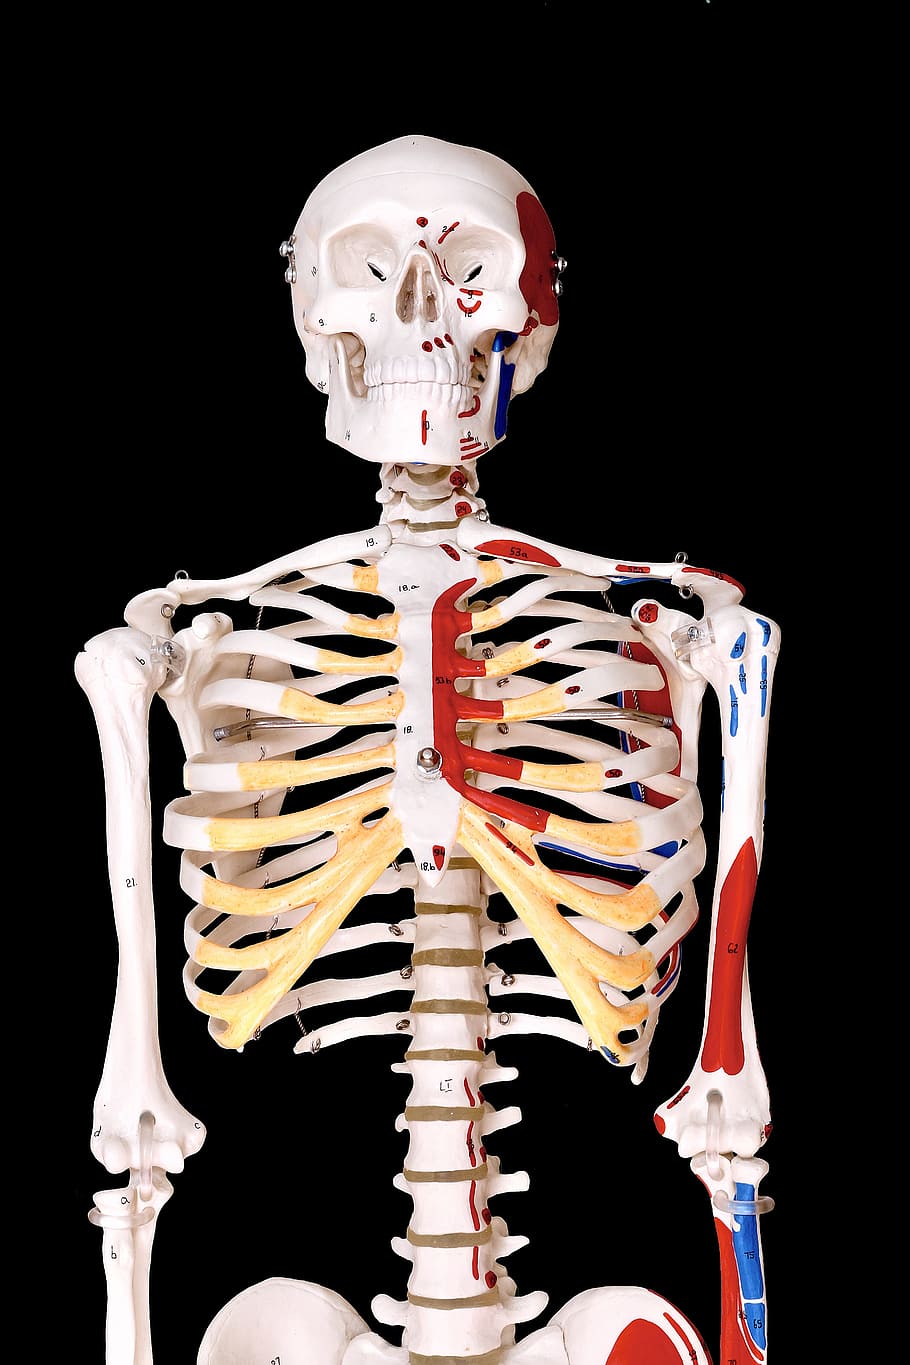 esqueleto, humano, modelo, fisio, anatomía, hueso, esqueleto humano, hueso humano, fondo negro, parte del cuerpo humano